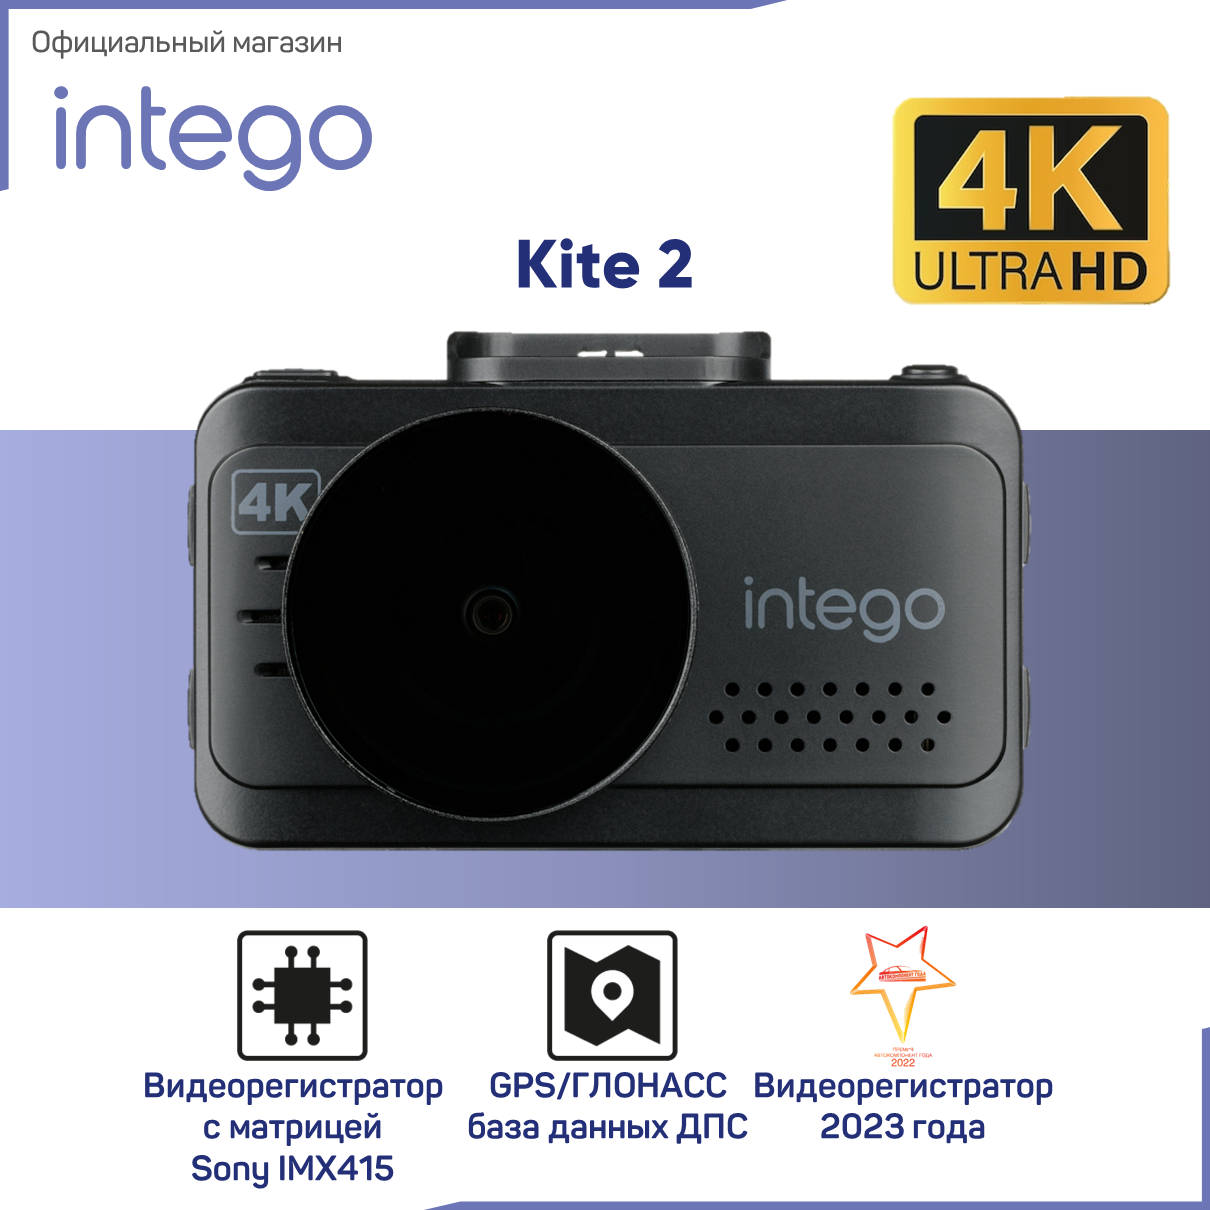 Intego Kite 2 - видеорегистратор с базой данных камер и WiFi-модулем